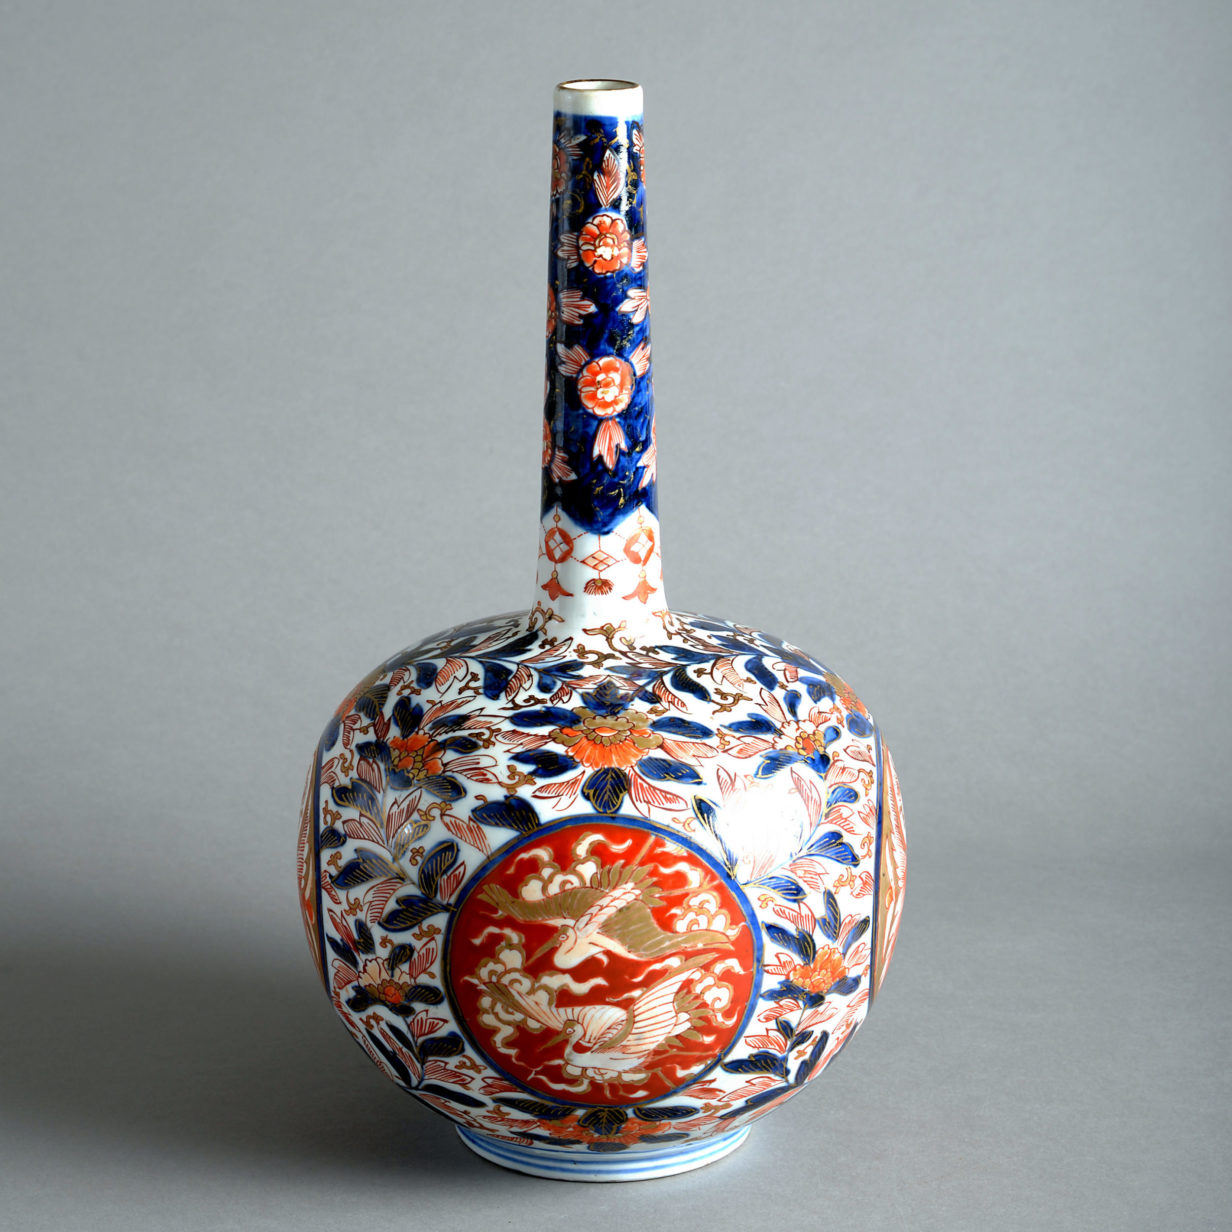 A 19th century imari porcelain bottle vase